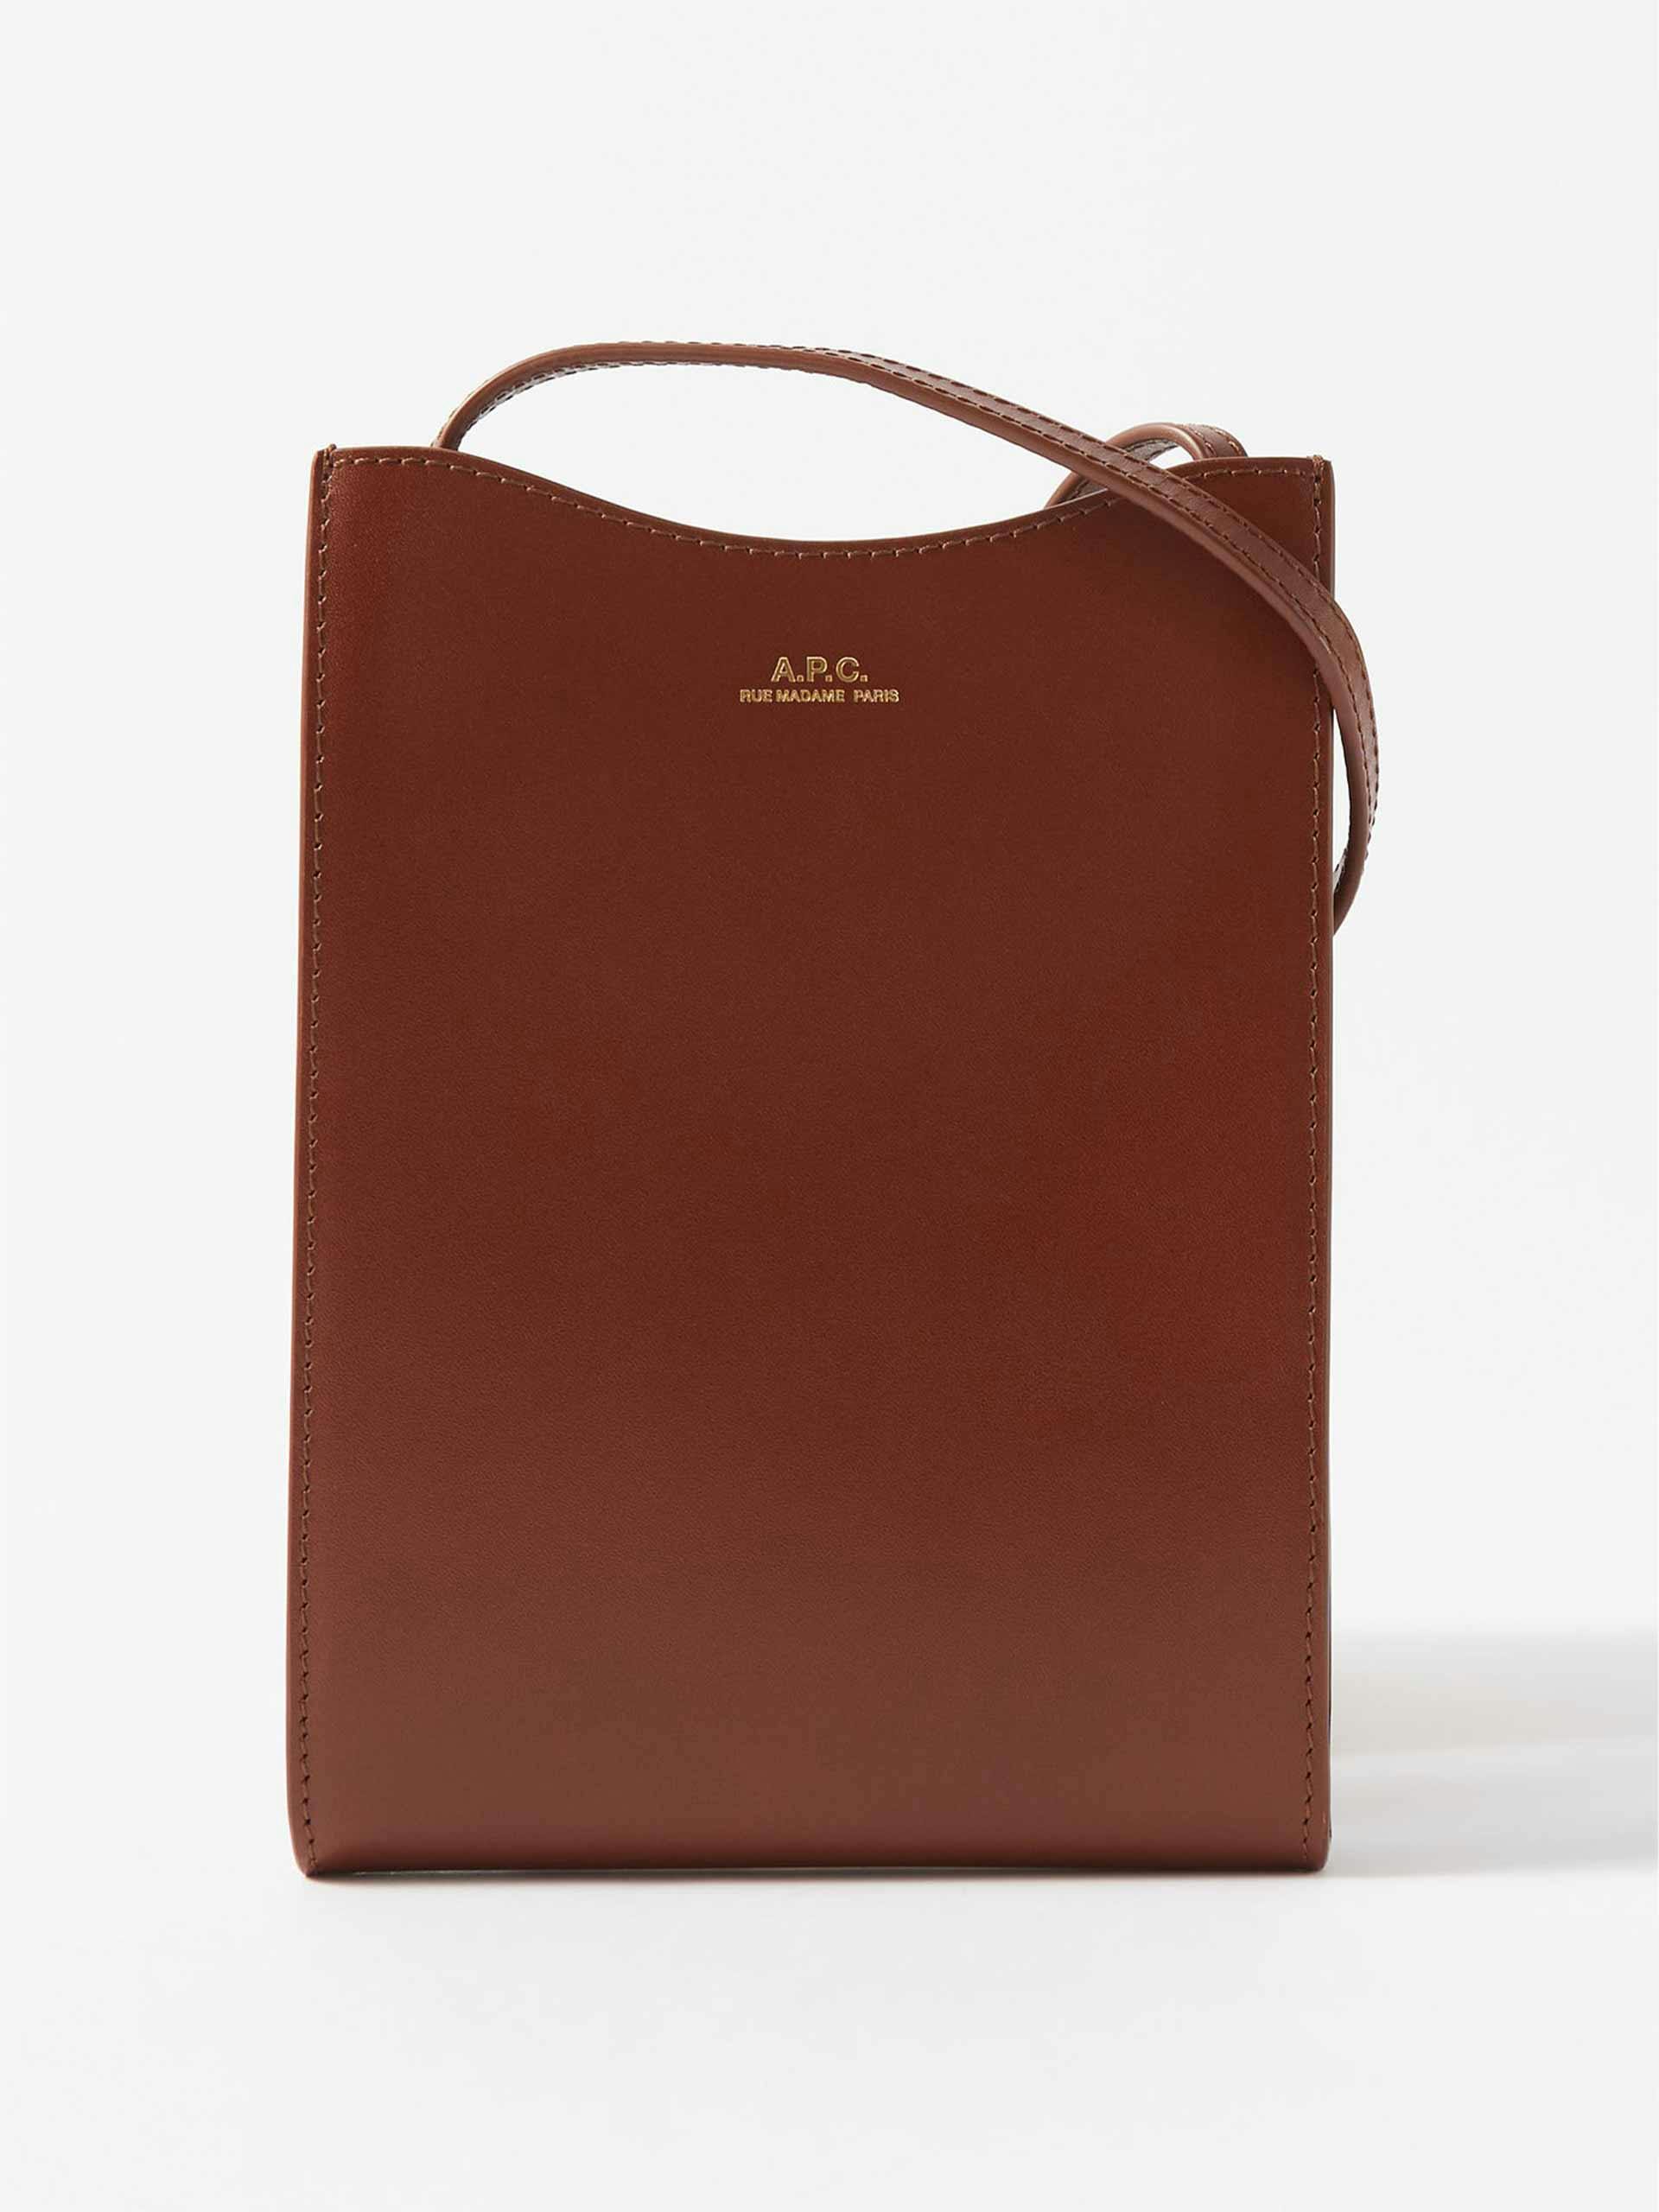 Brown leather cross-body bag